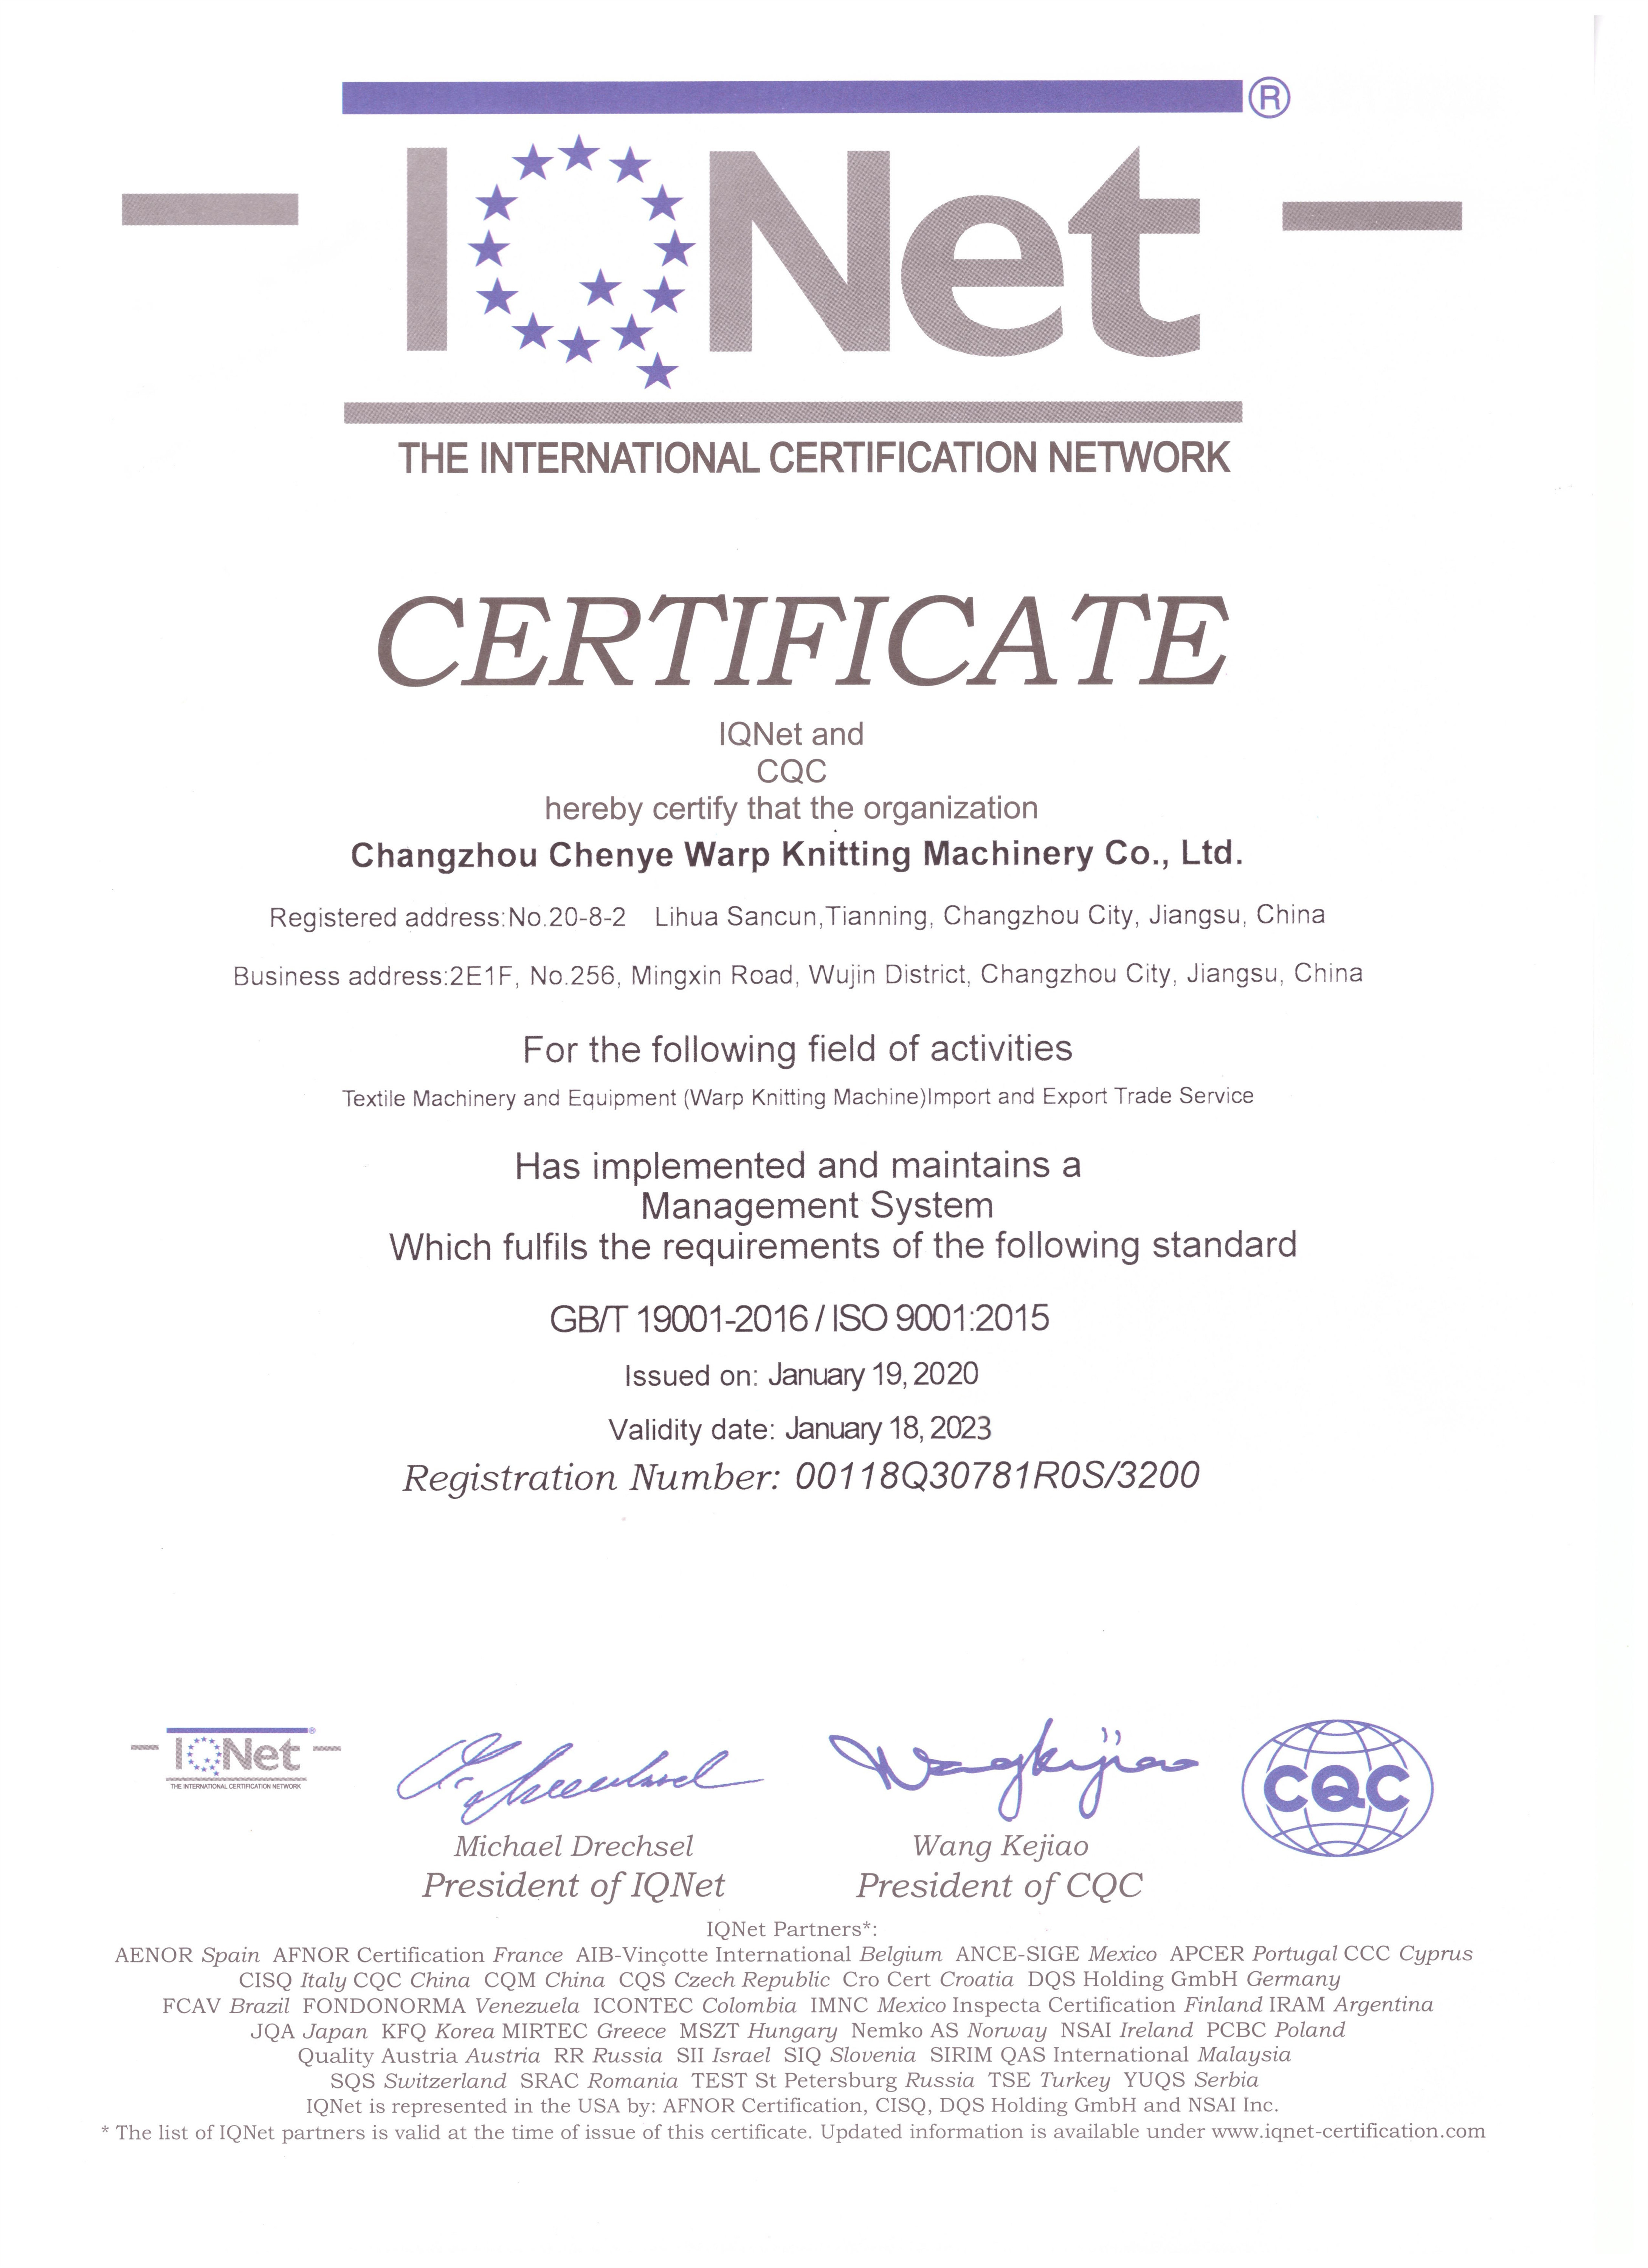 Changzhou Chenye Warp Knitting Machinery Co., Ltd. Leave Messages Certifications